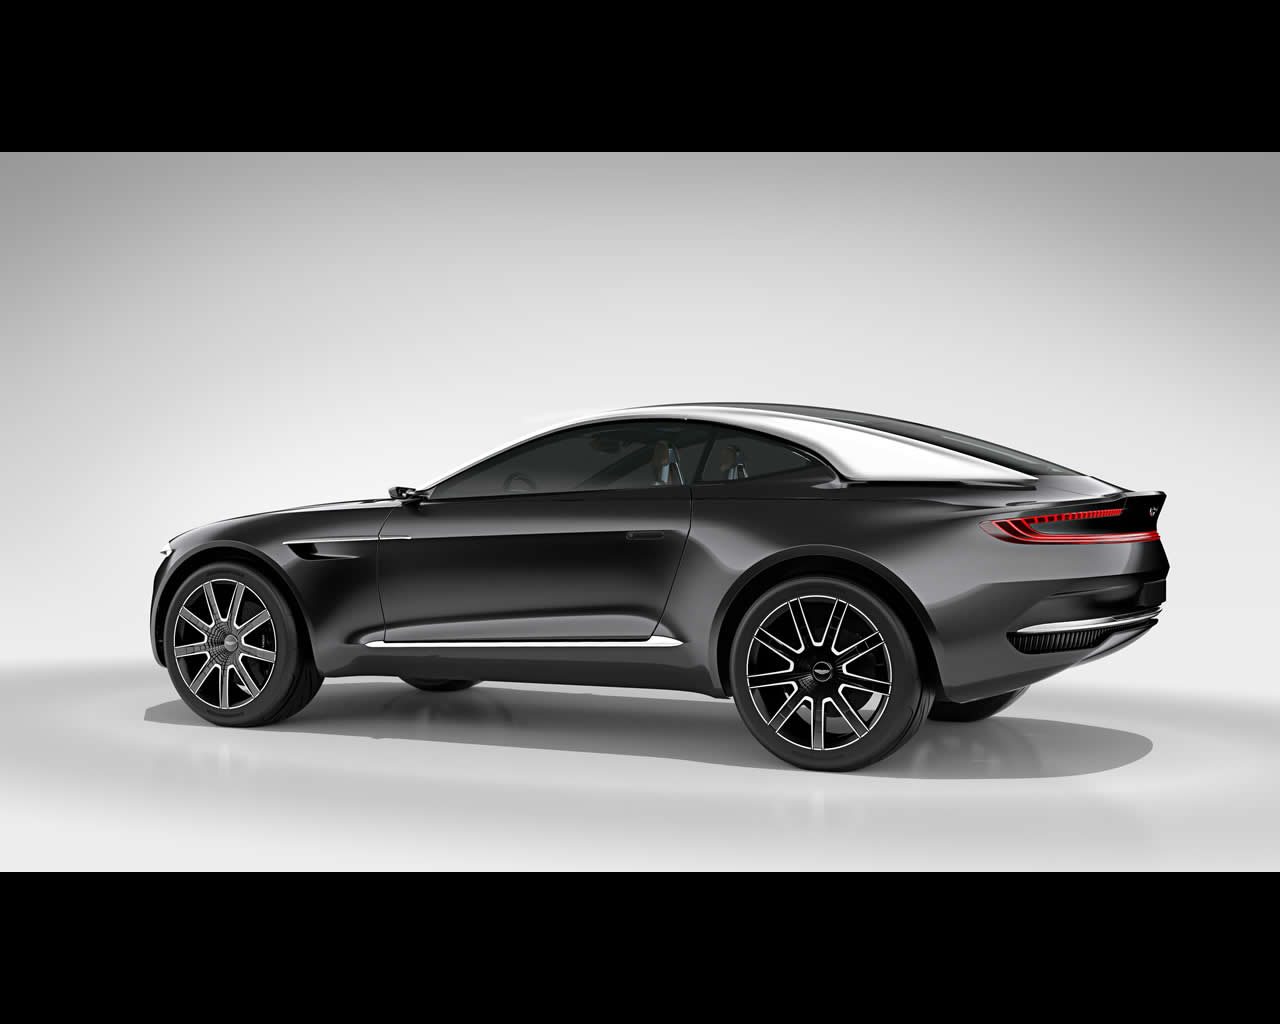 Aston Martin All Electric All Wheel Drive DBX Concept 2015